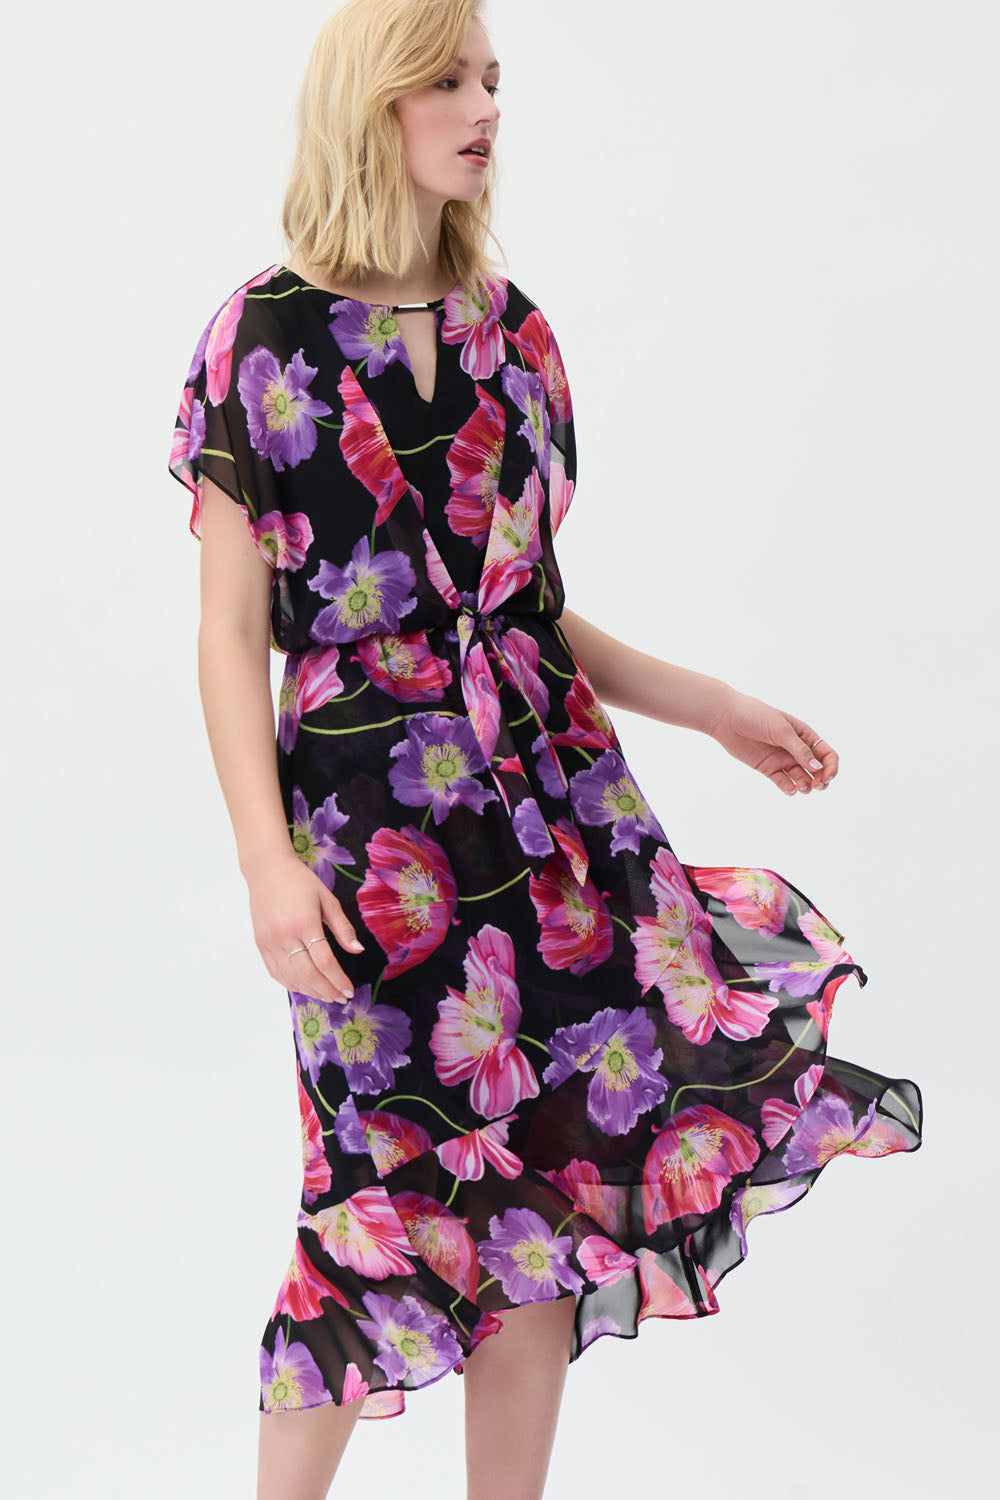 Joseph Ribkoff Black-Multi Floral Print Dress Style 231106